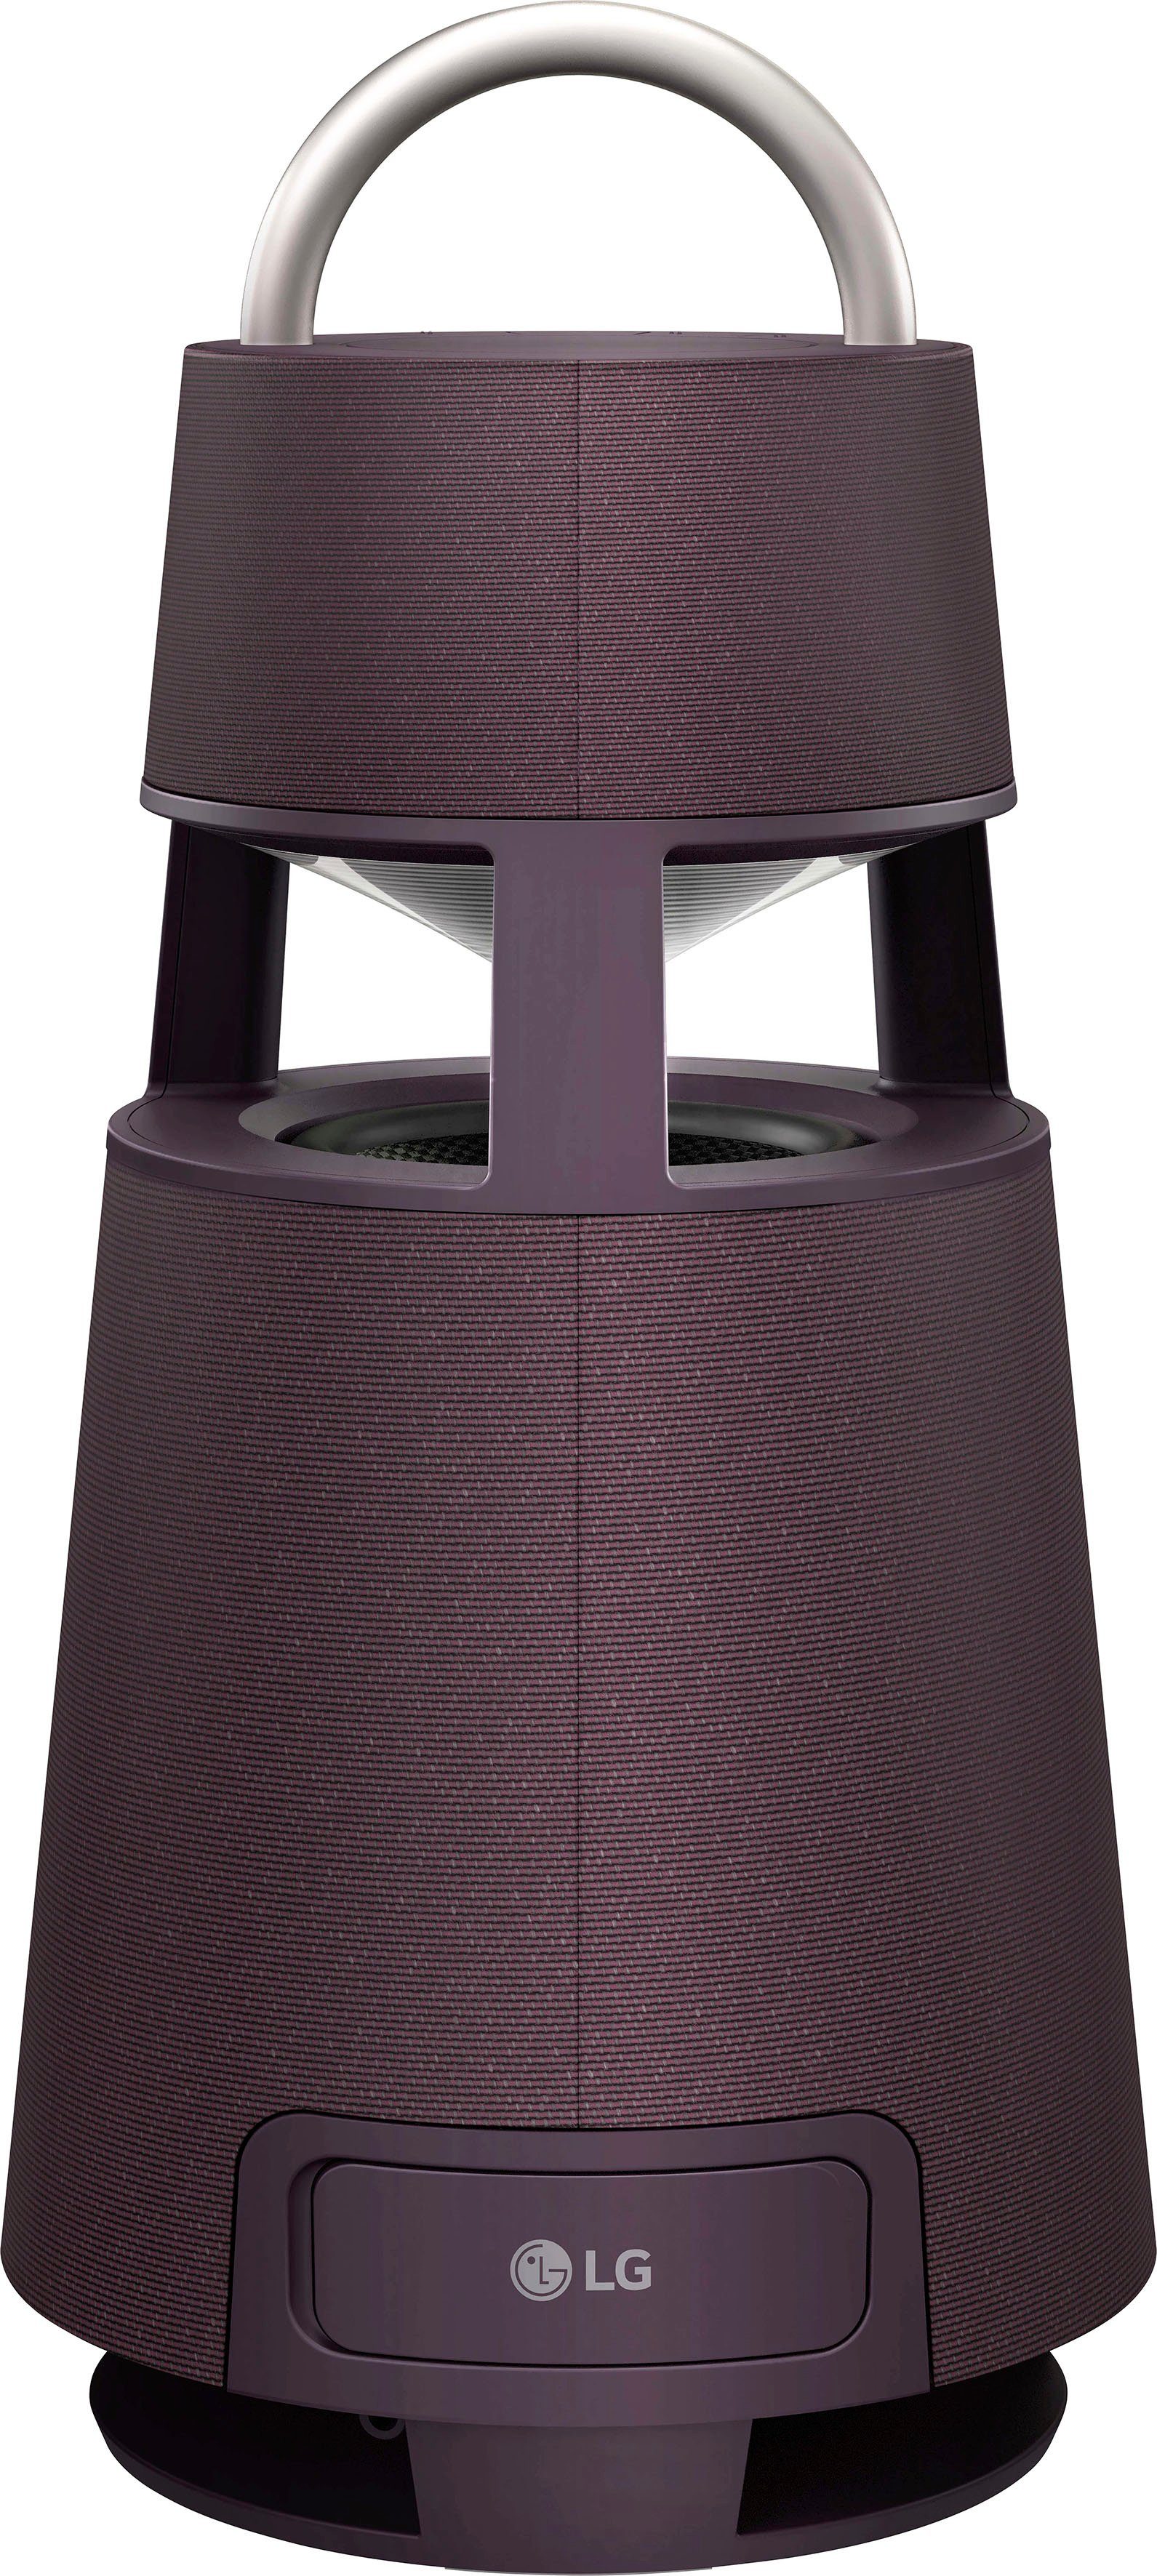 RP4 XBOOM LG 1.0 (120 bordeaux W) 360 Bluetooth-Speaker